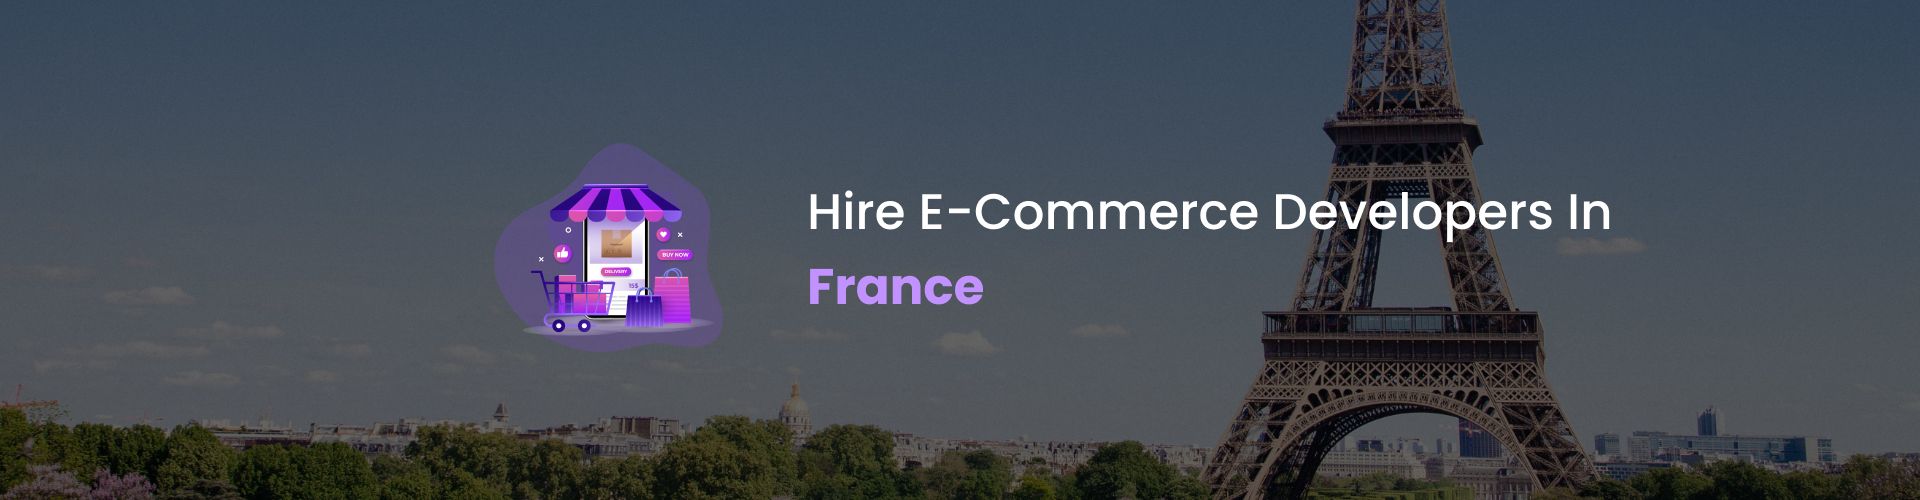 ecommerce developers france